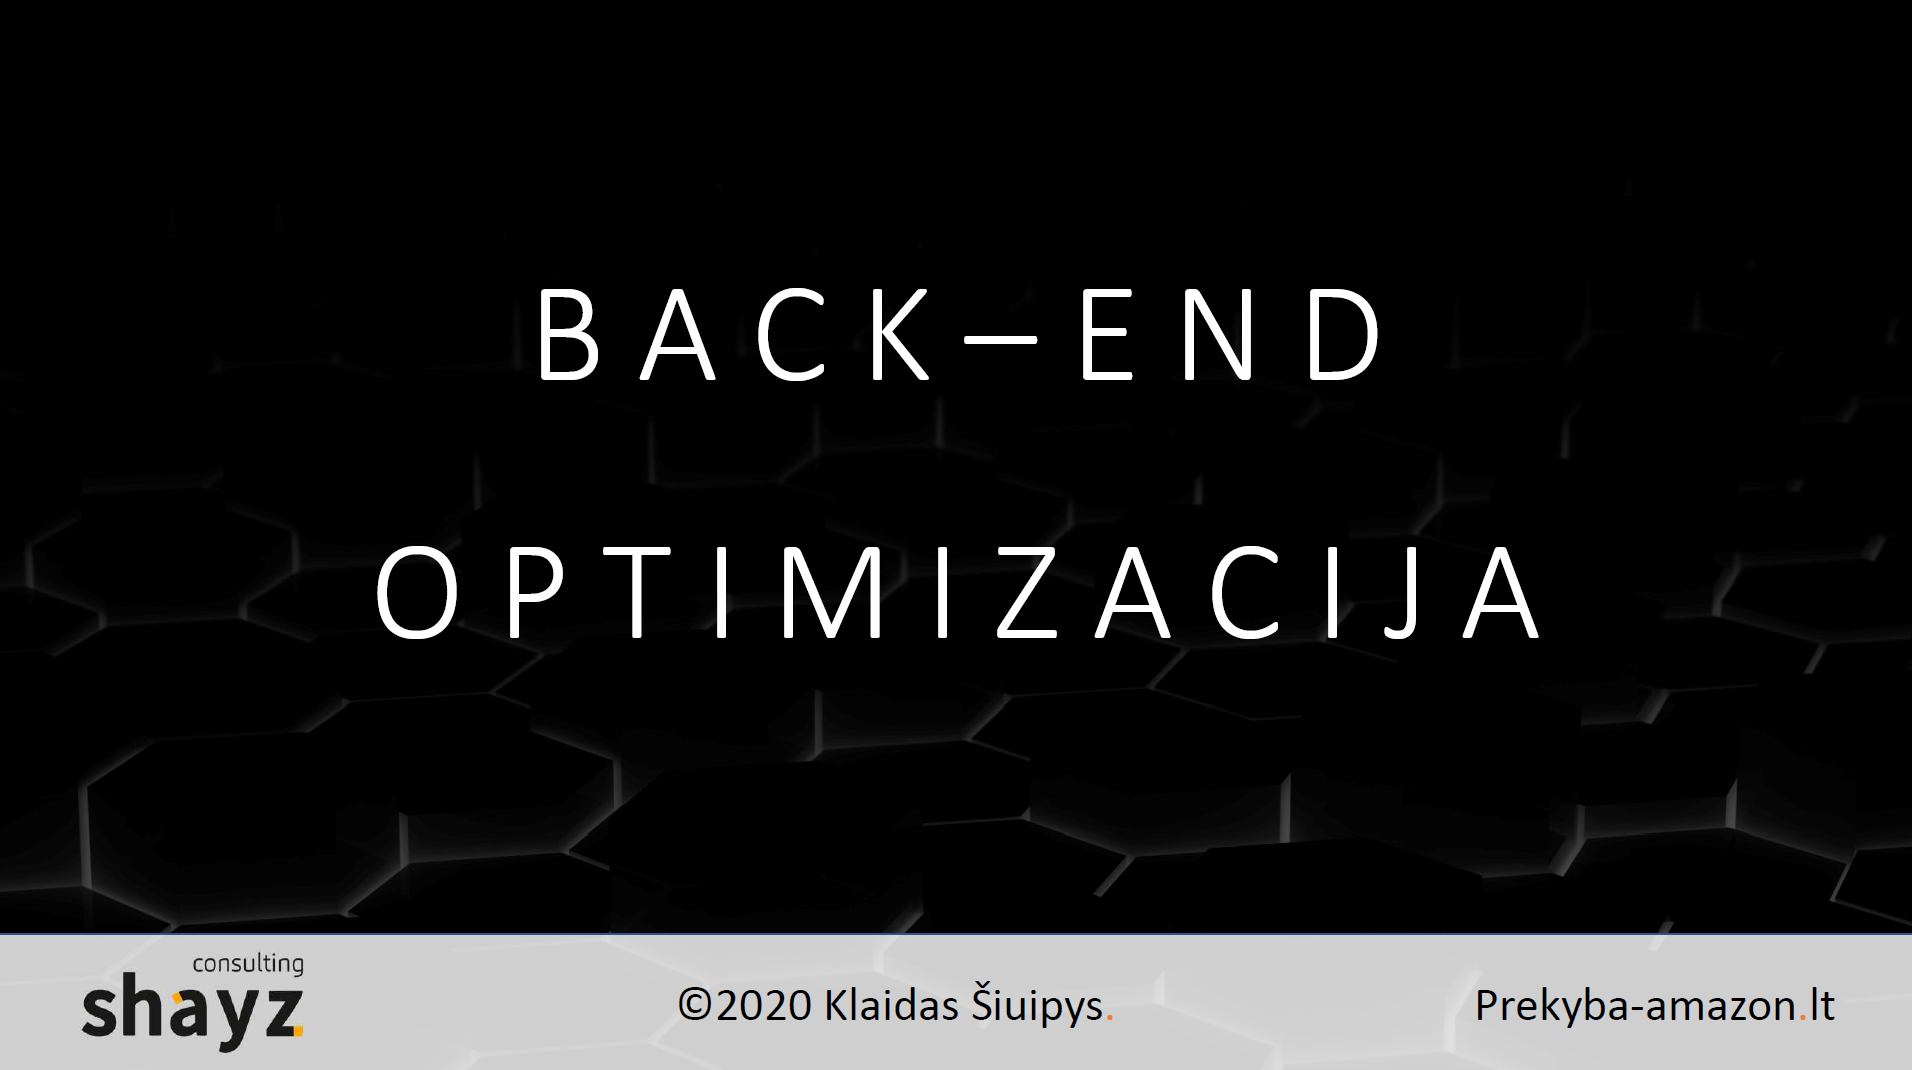 Back-end optimizacija